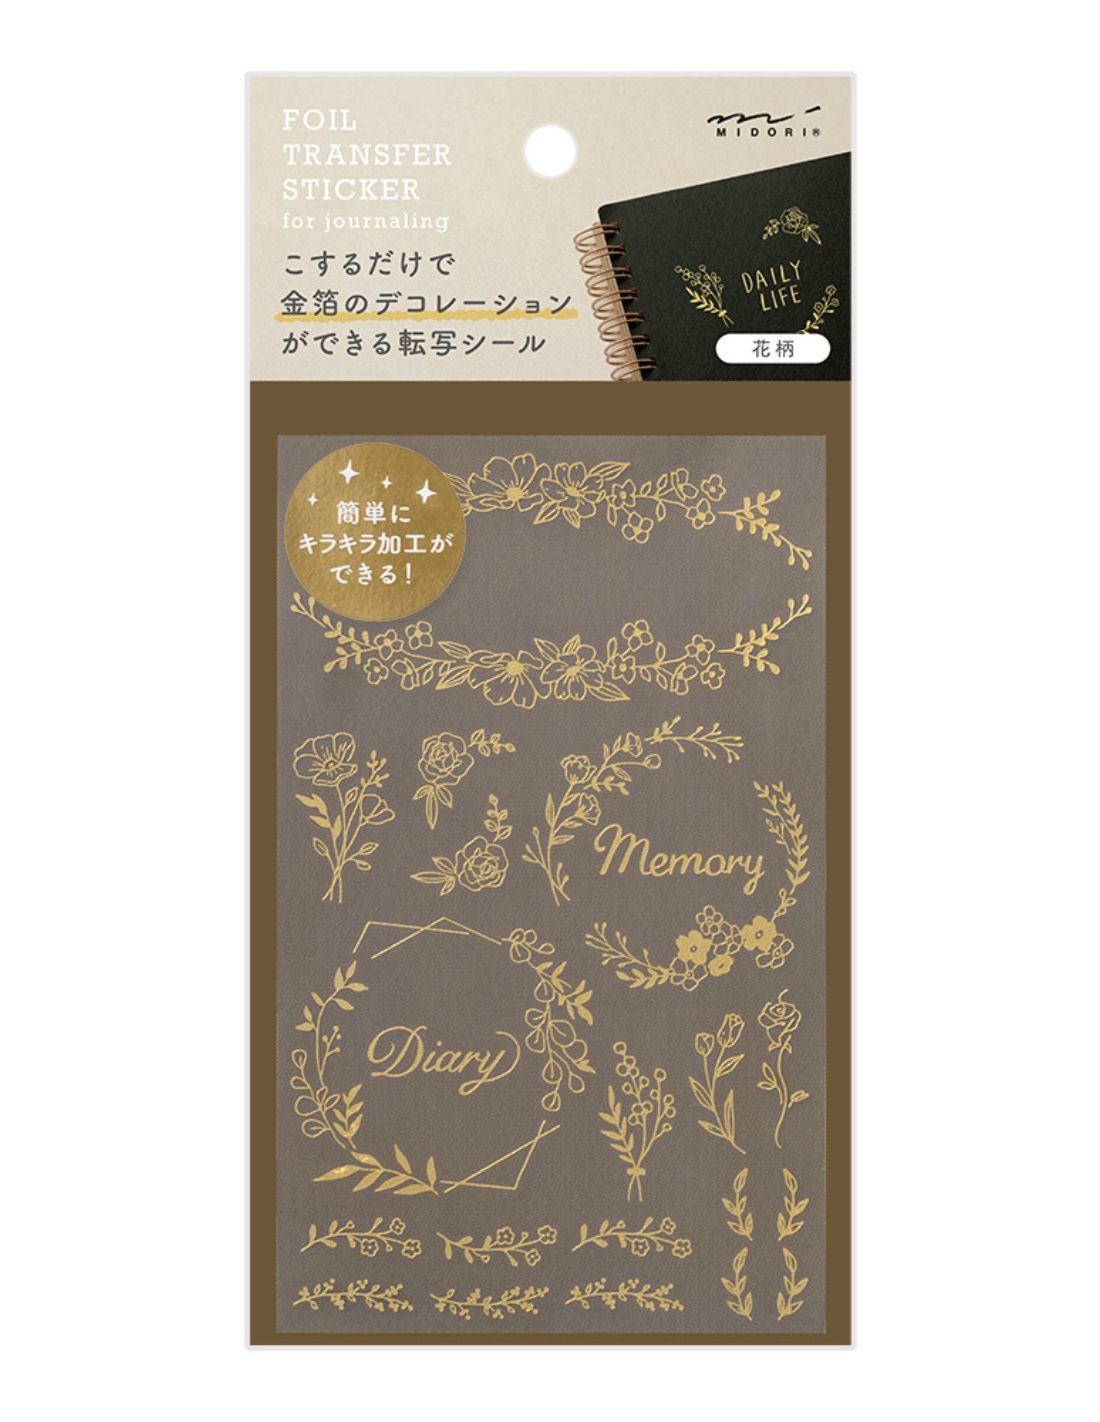 Midori Foil Transfer Stickers - Floral